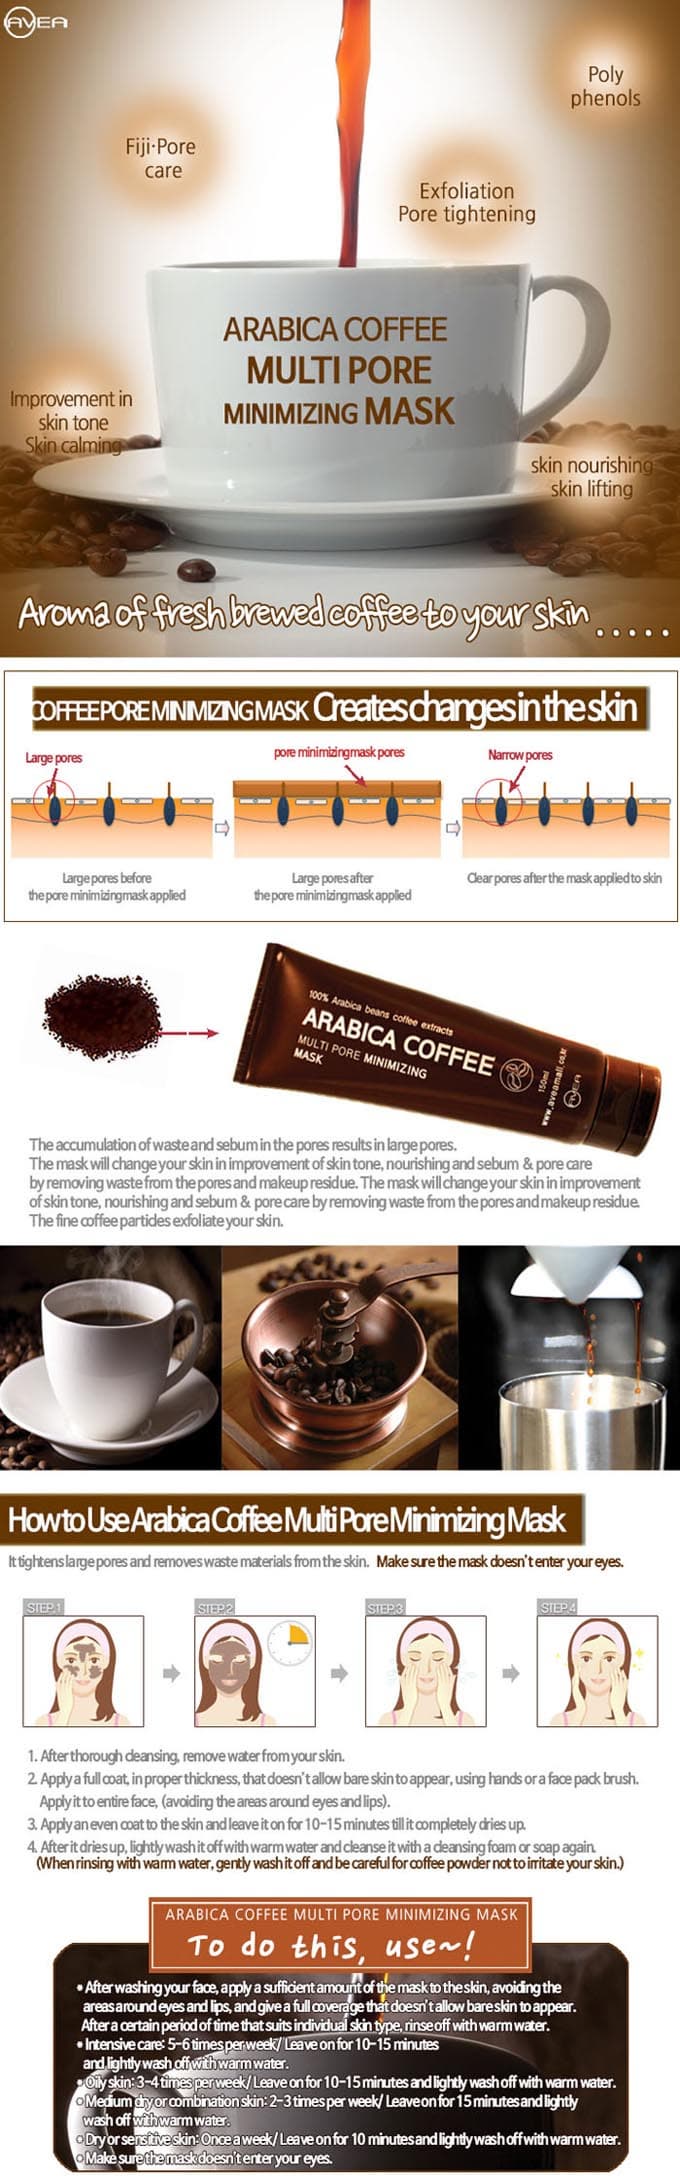 Arabica Coffee Multi Pore Minimizing Mask